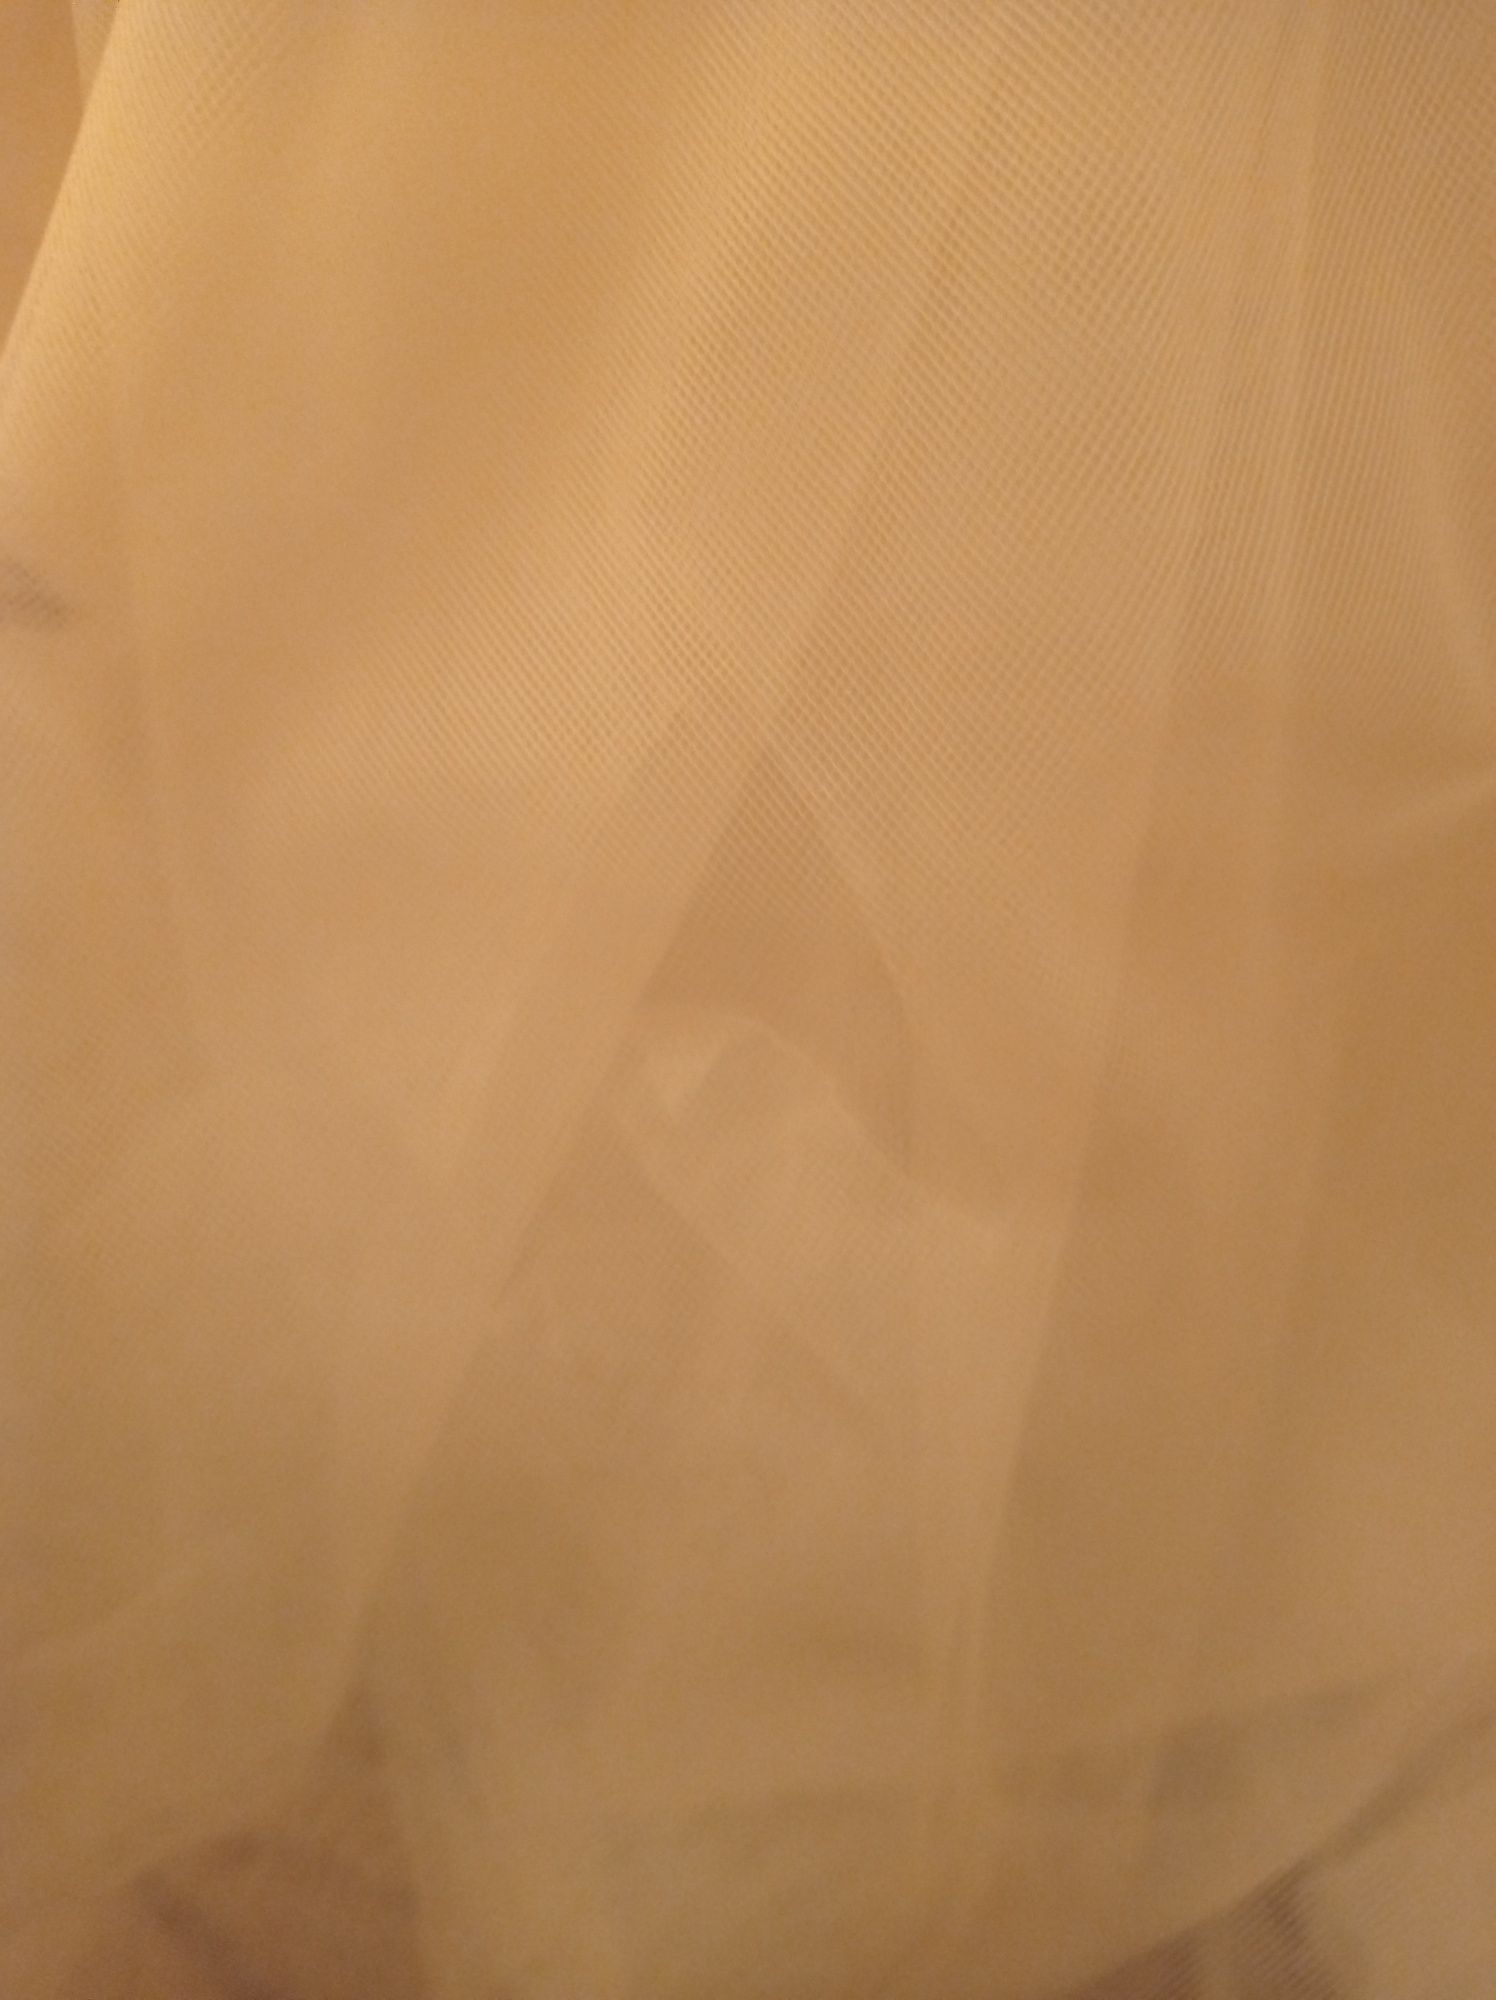 Suknia ślubna Stella York 6724 kolekcja 2020